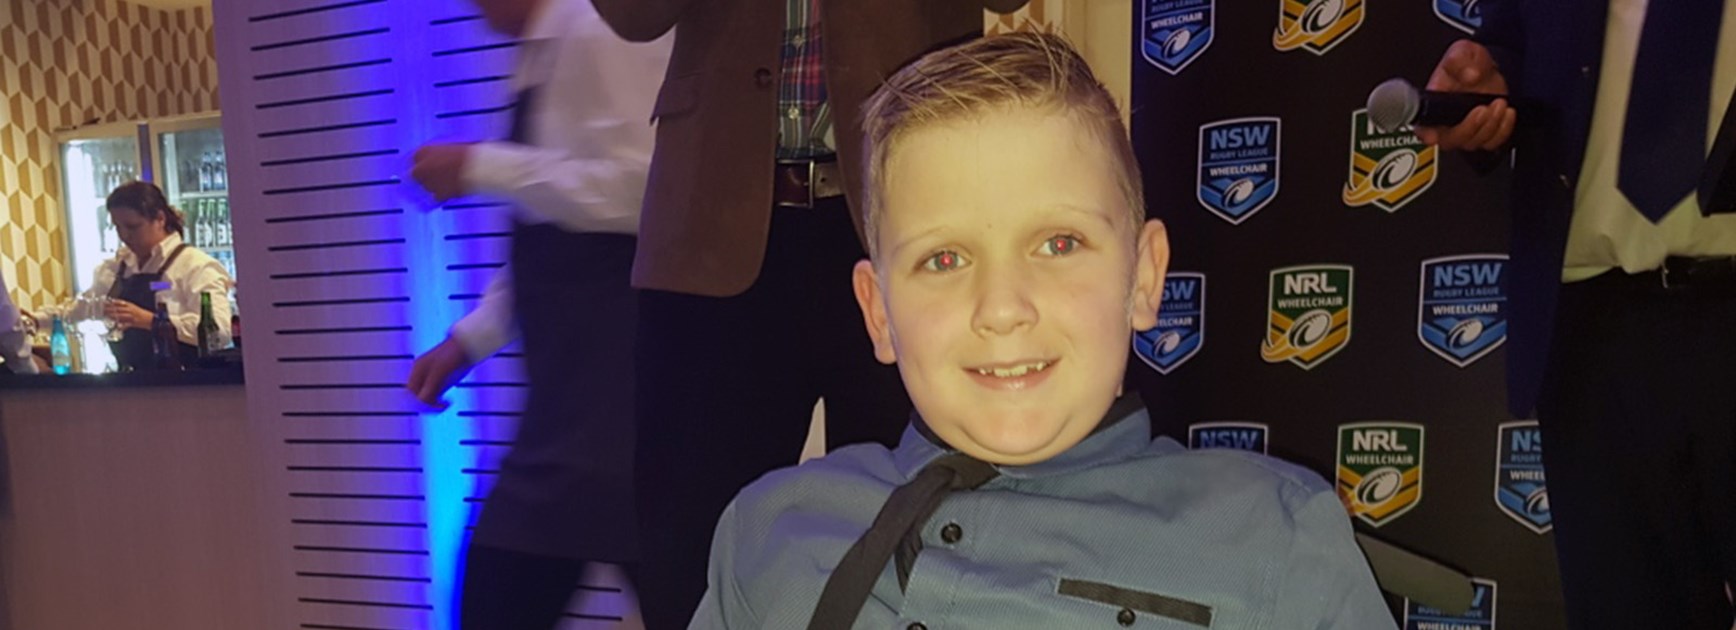 7-year-old boy wins Junior Wheelchair Rugby League Award